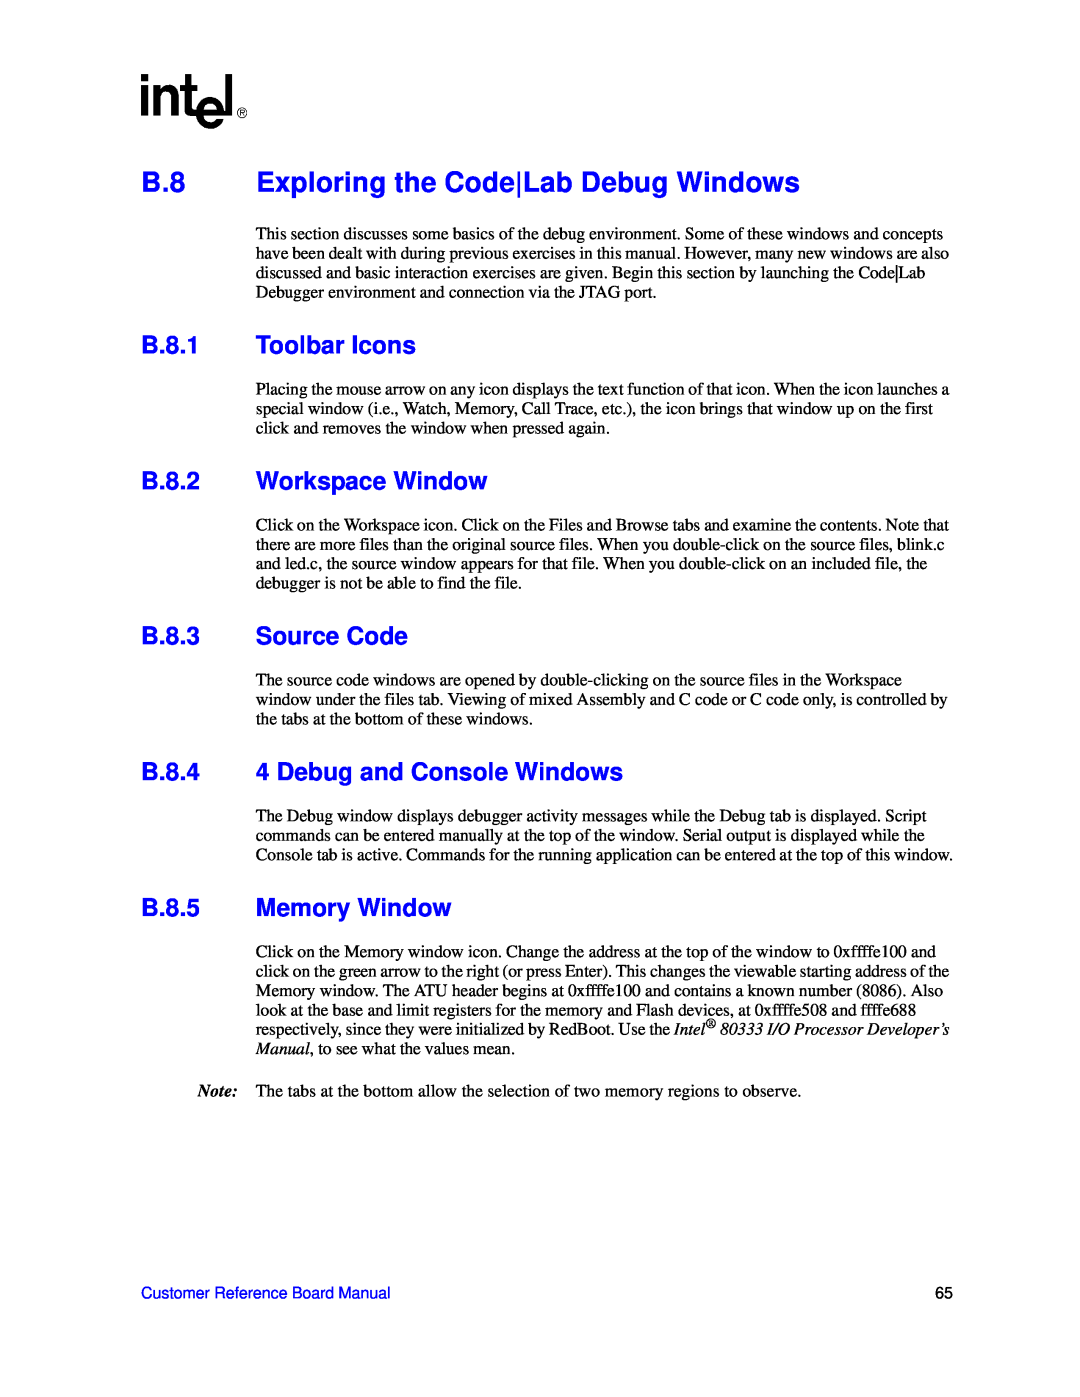 Intel IQ80333 B.8 Exploring the Code Lab Debug Windows, B.8.1 Toolbar Icons, B.8.2 Workspace Window, B.8.3 Source Code 